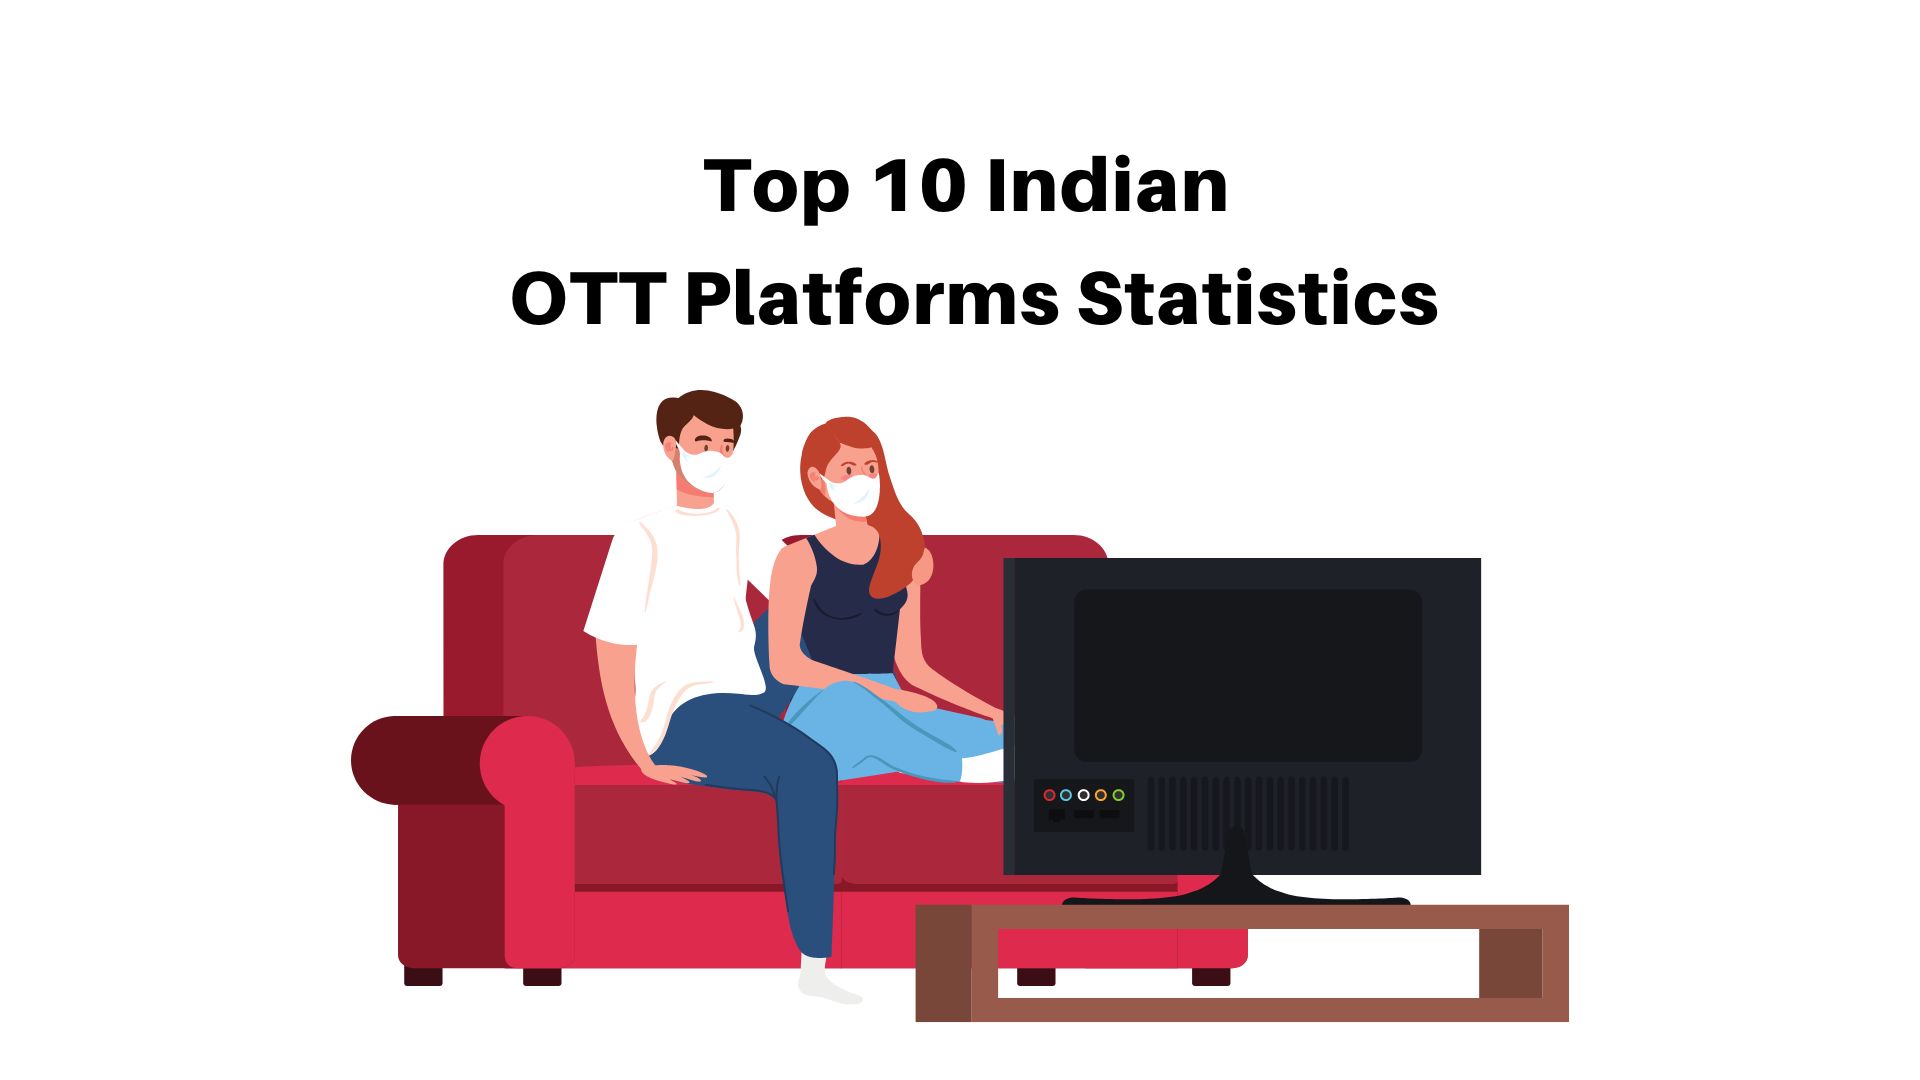 Top 10 Indian OTT Platforms Statistics